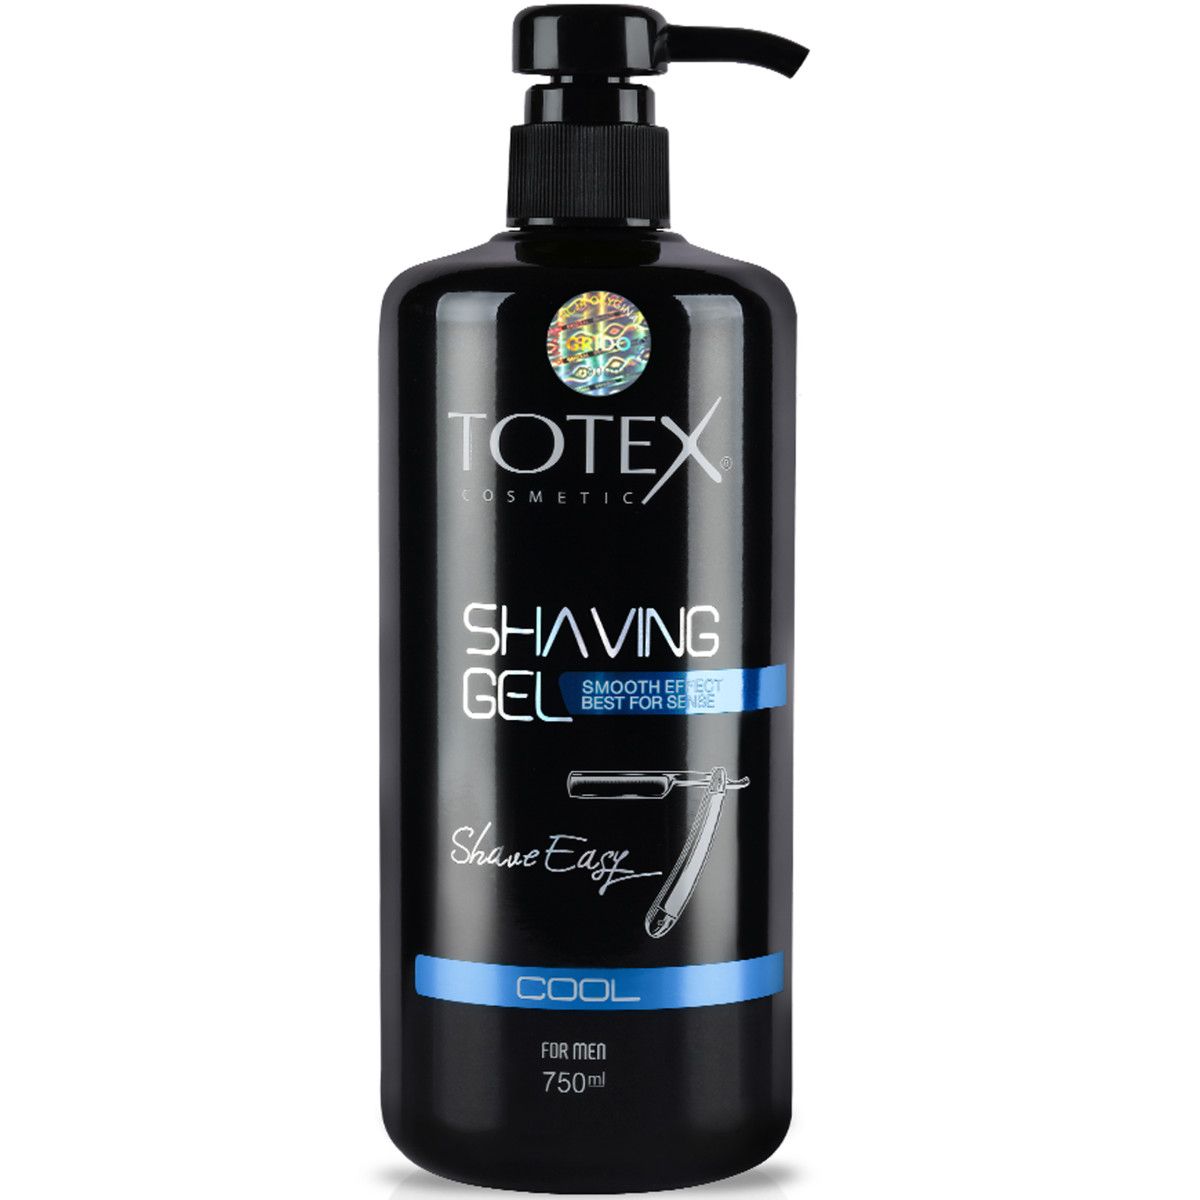 Totex Shaving Gel Cool For Men - chłodzący żel do golenia, 750ml